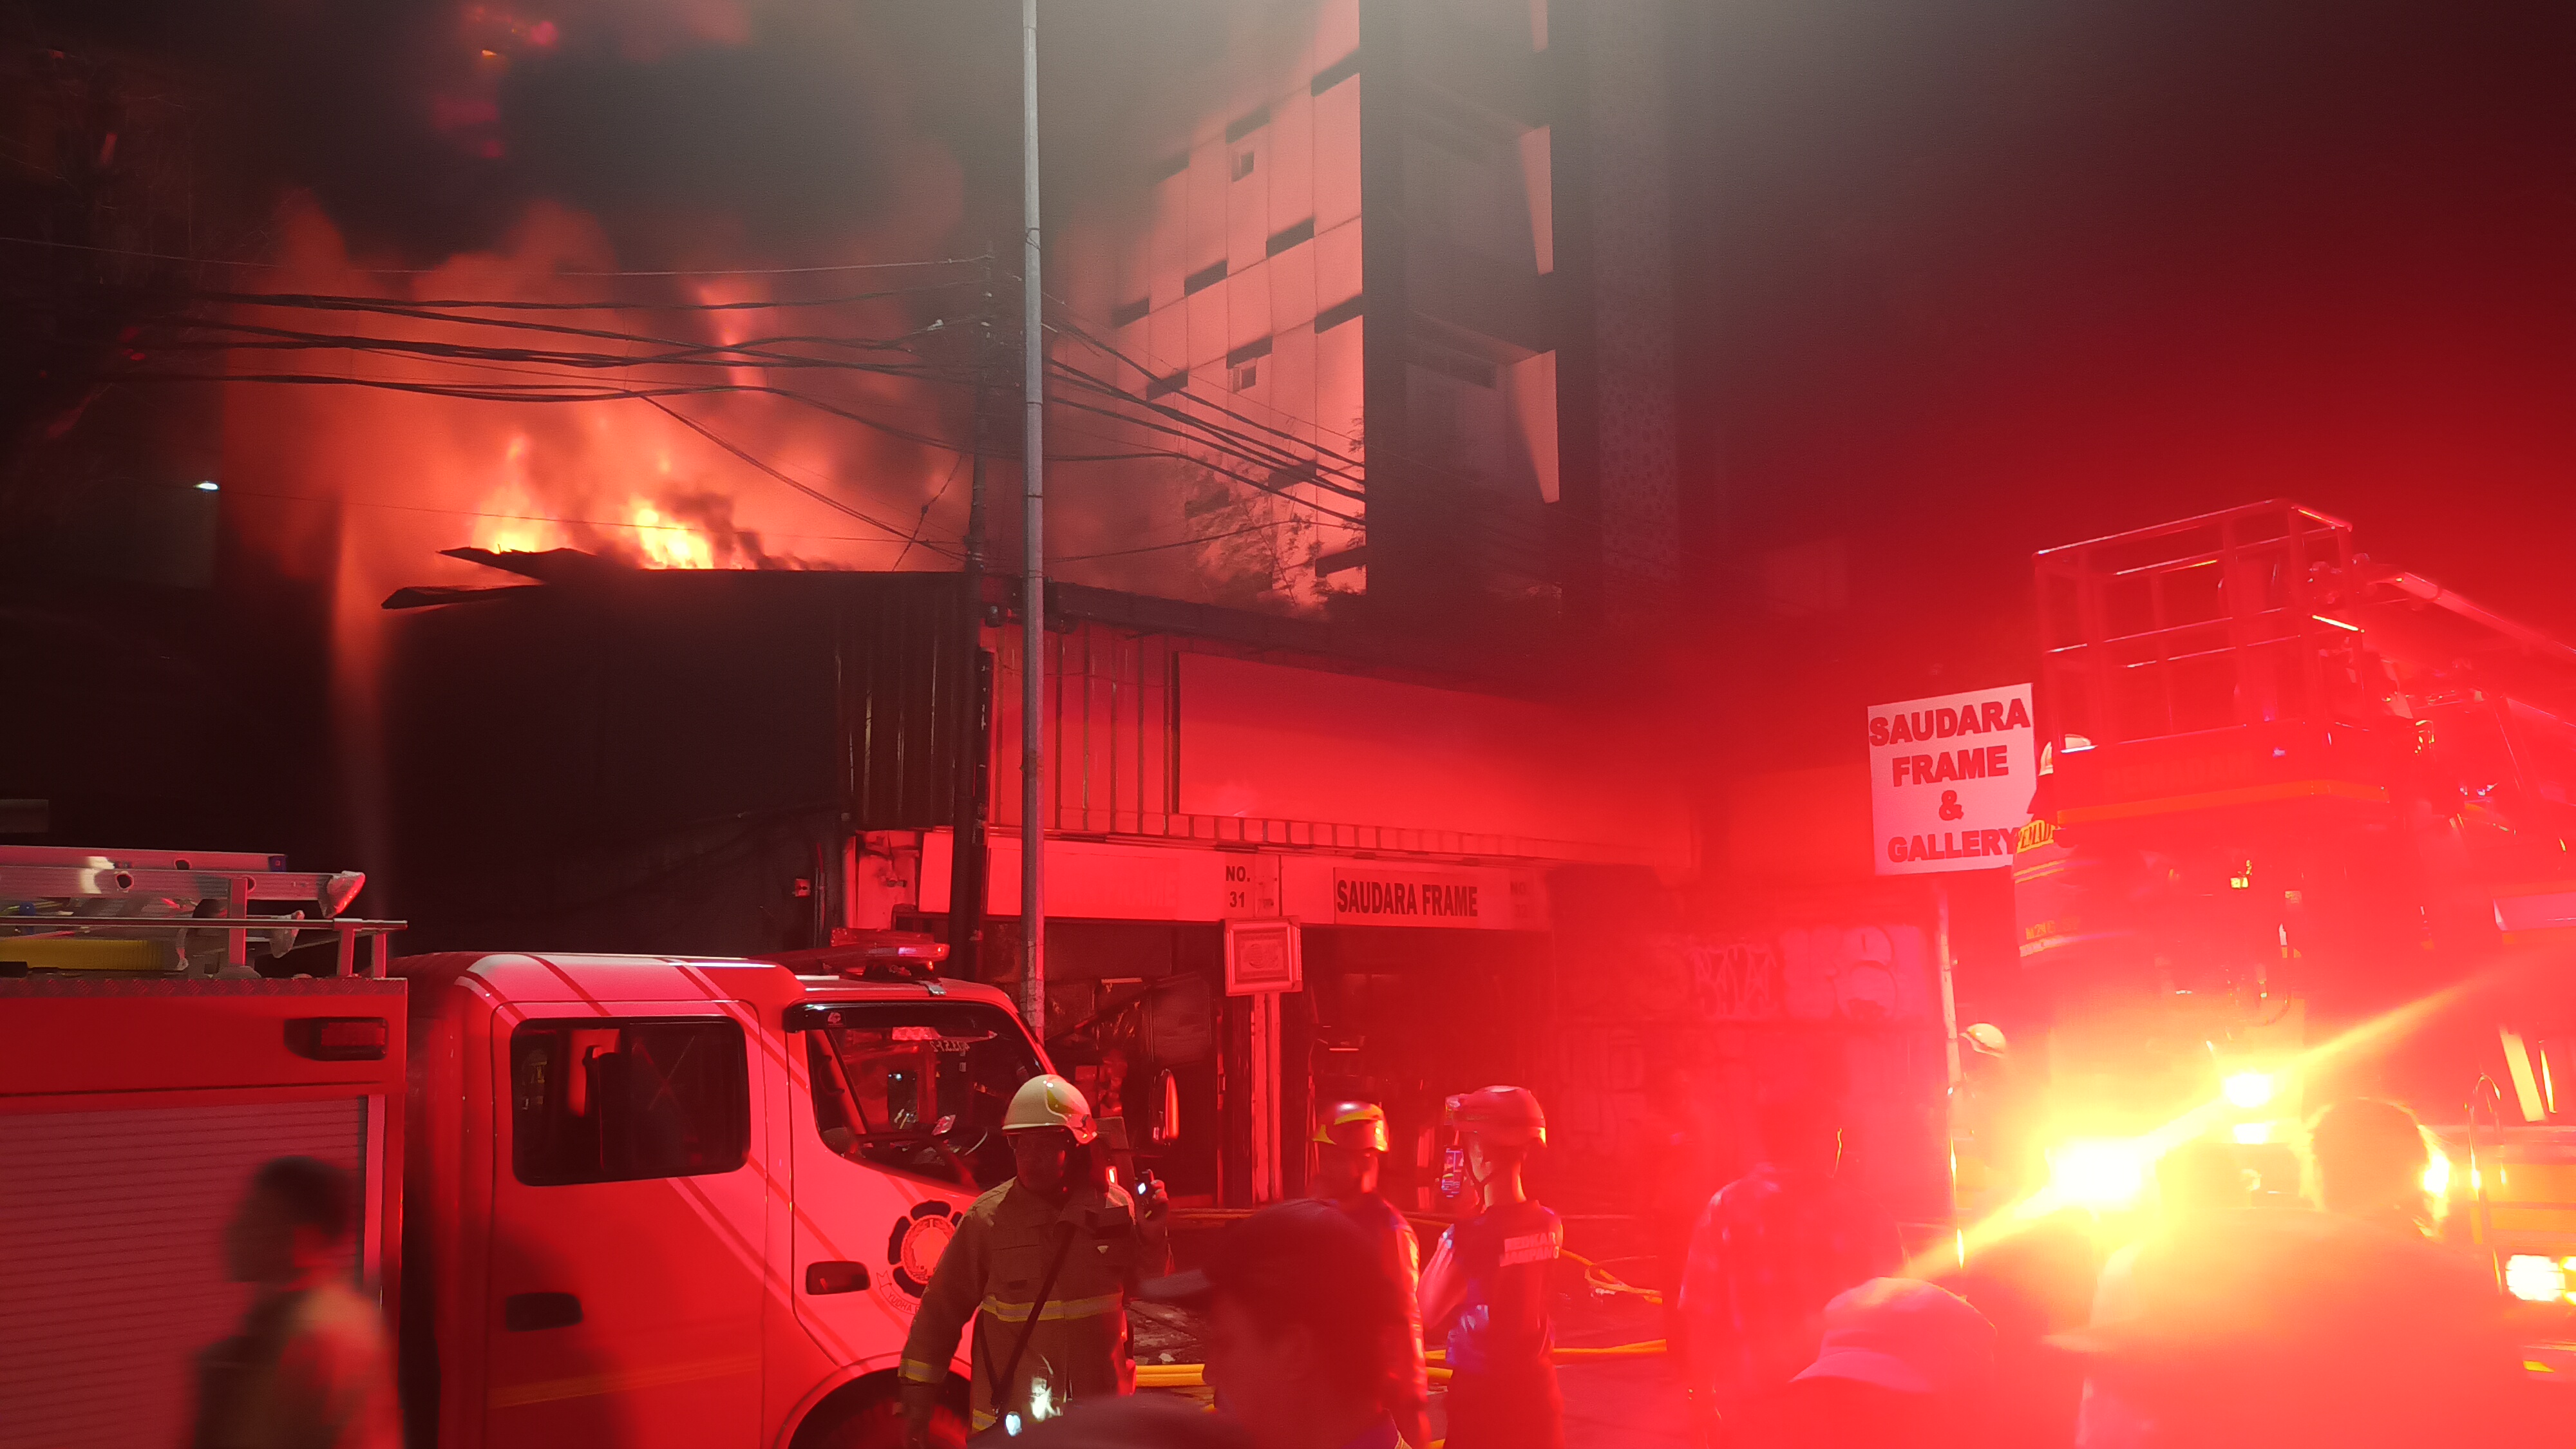 Kebakaran Toko Bingkai di Mampang, 7 Orang Terjebak, 2 di Antaranya Anak-anak